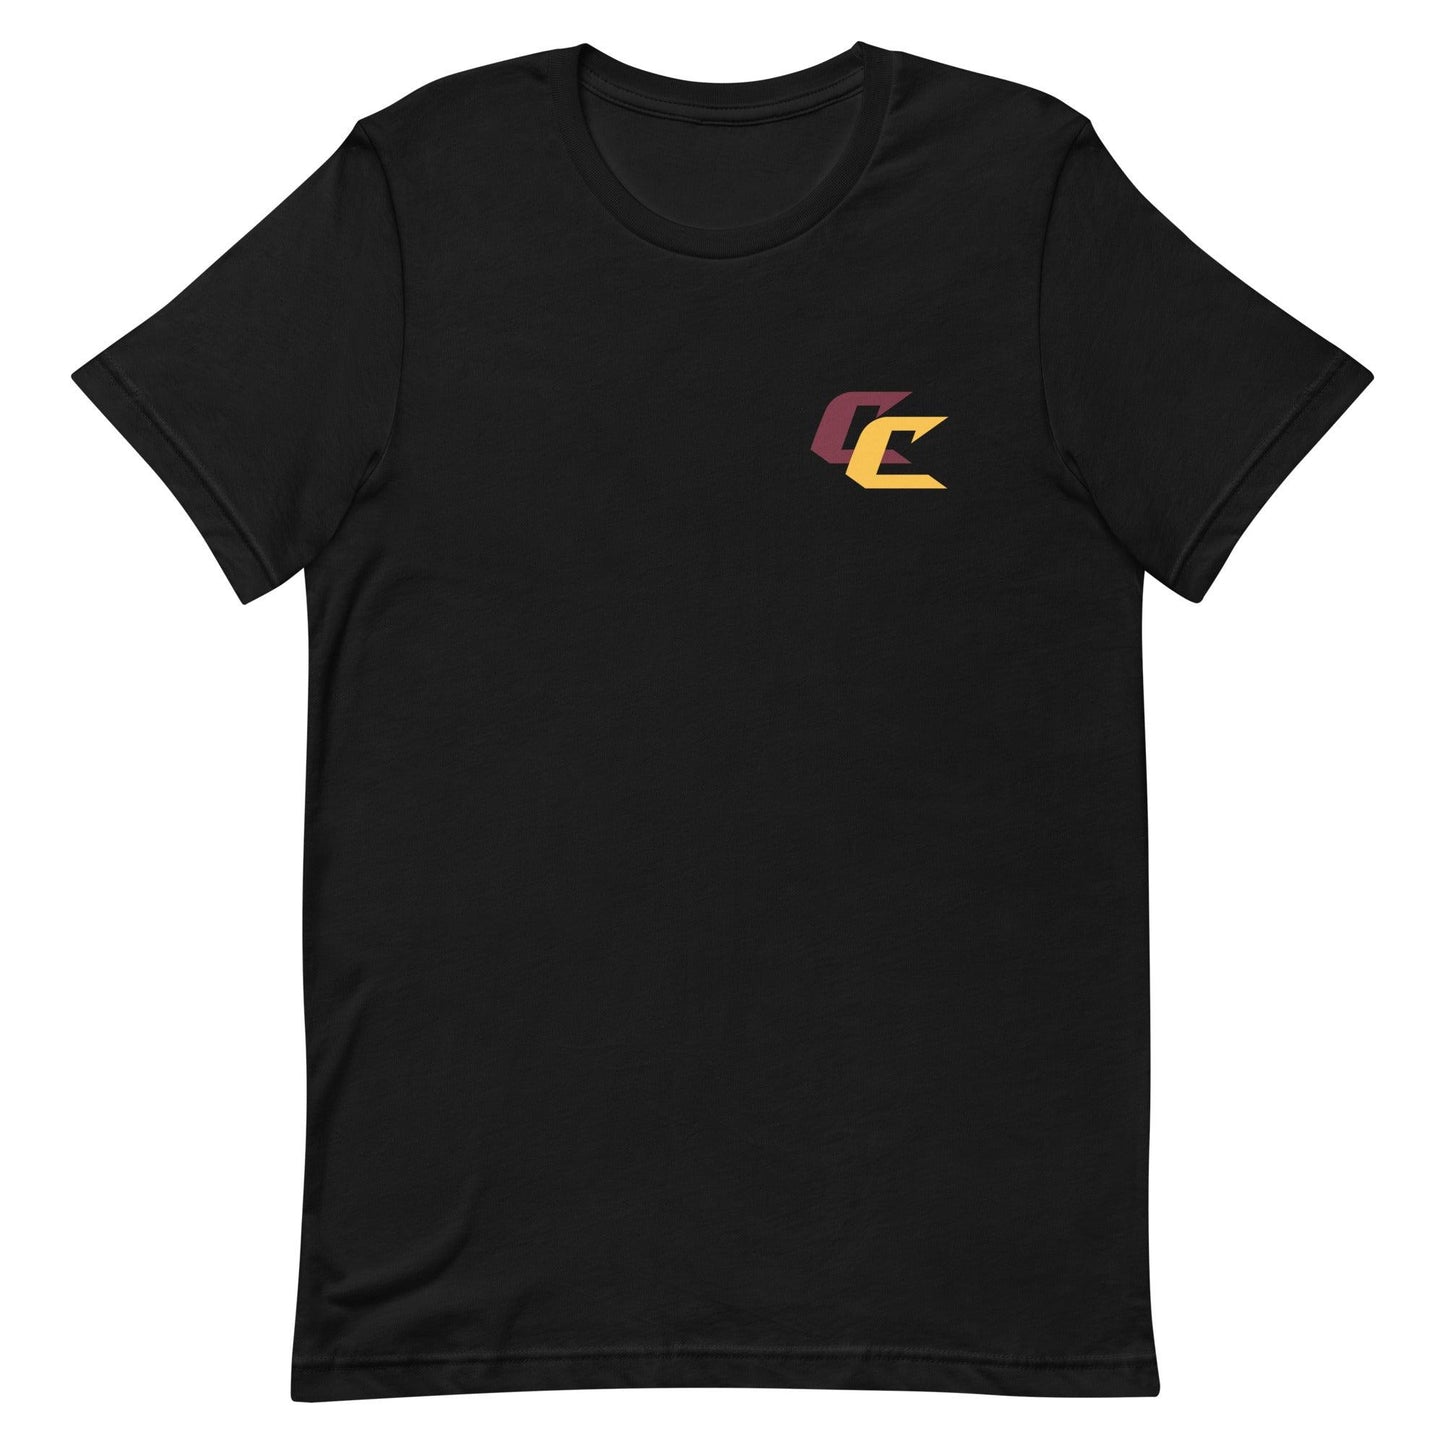 Corey Crooms "Signature" t-shirt - Fan Arch